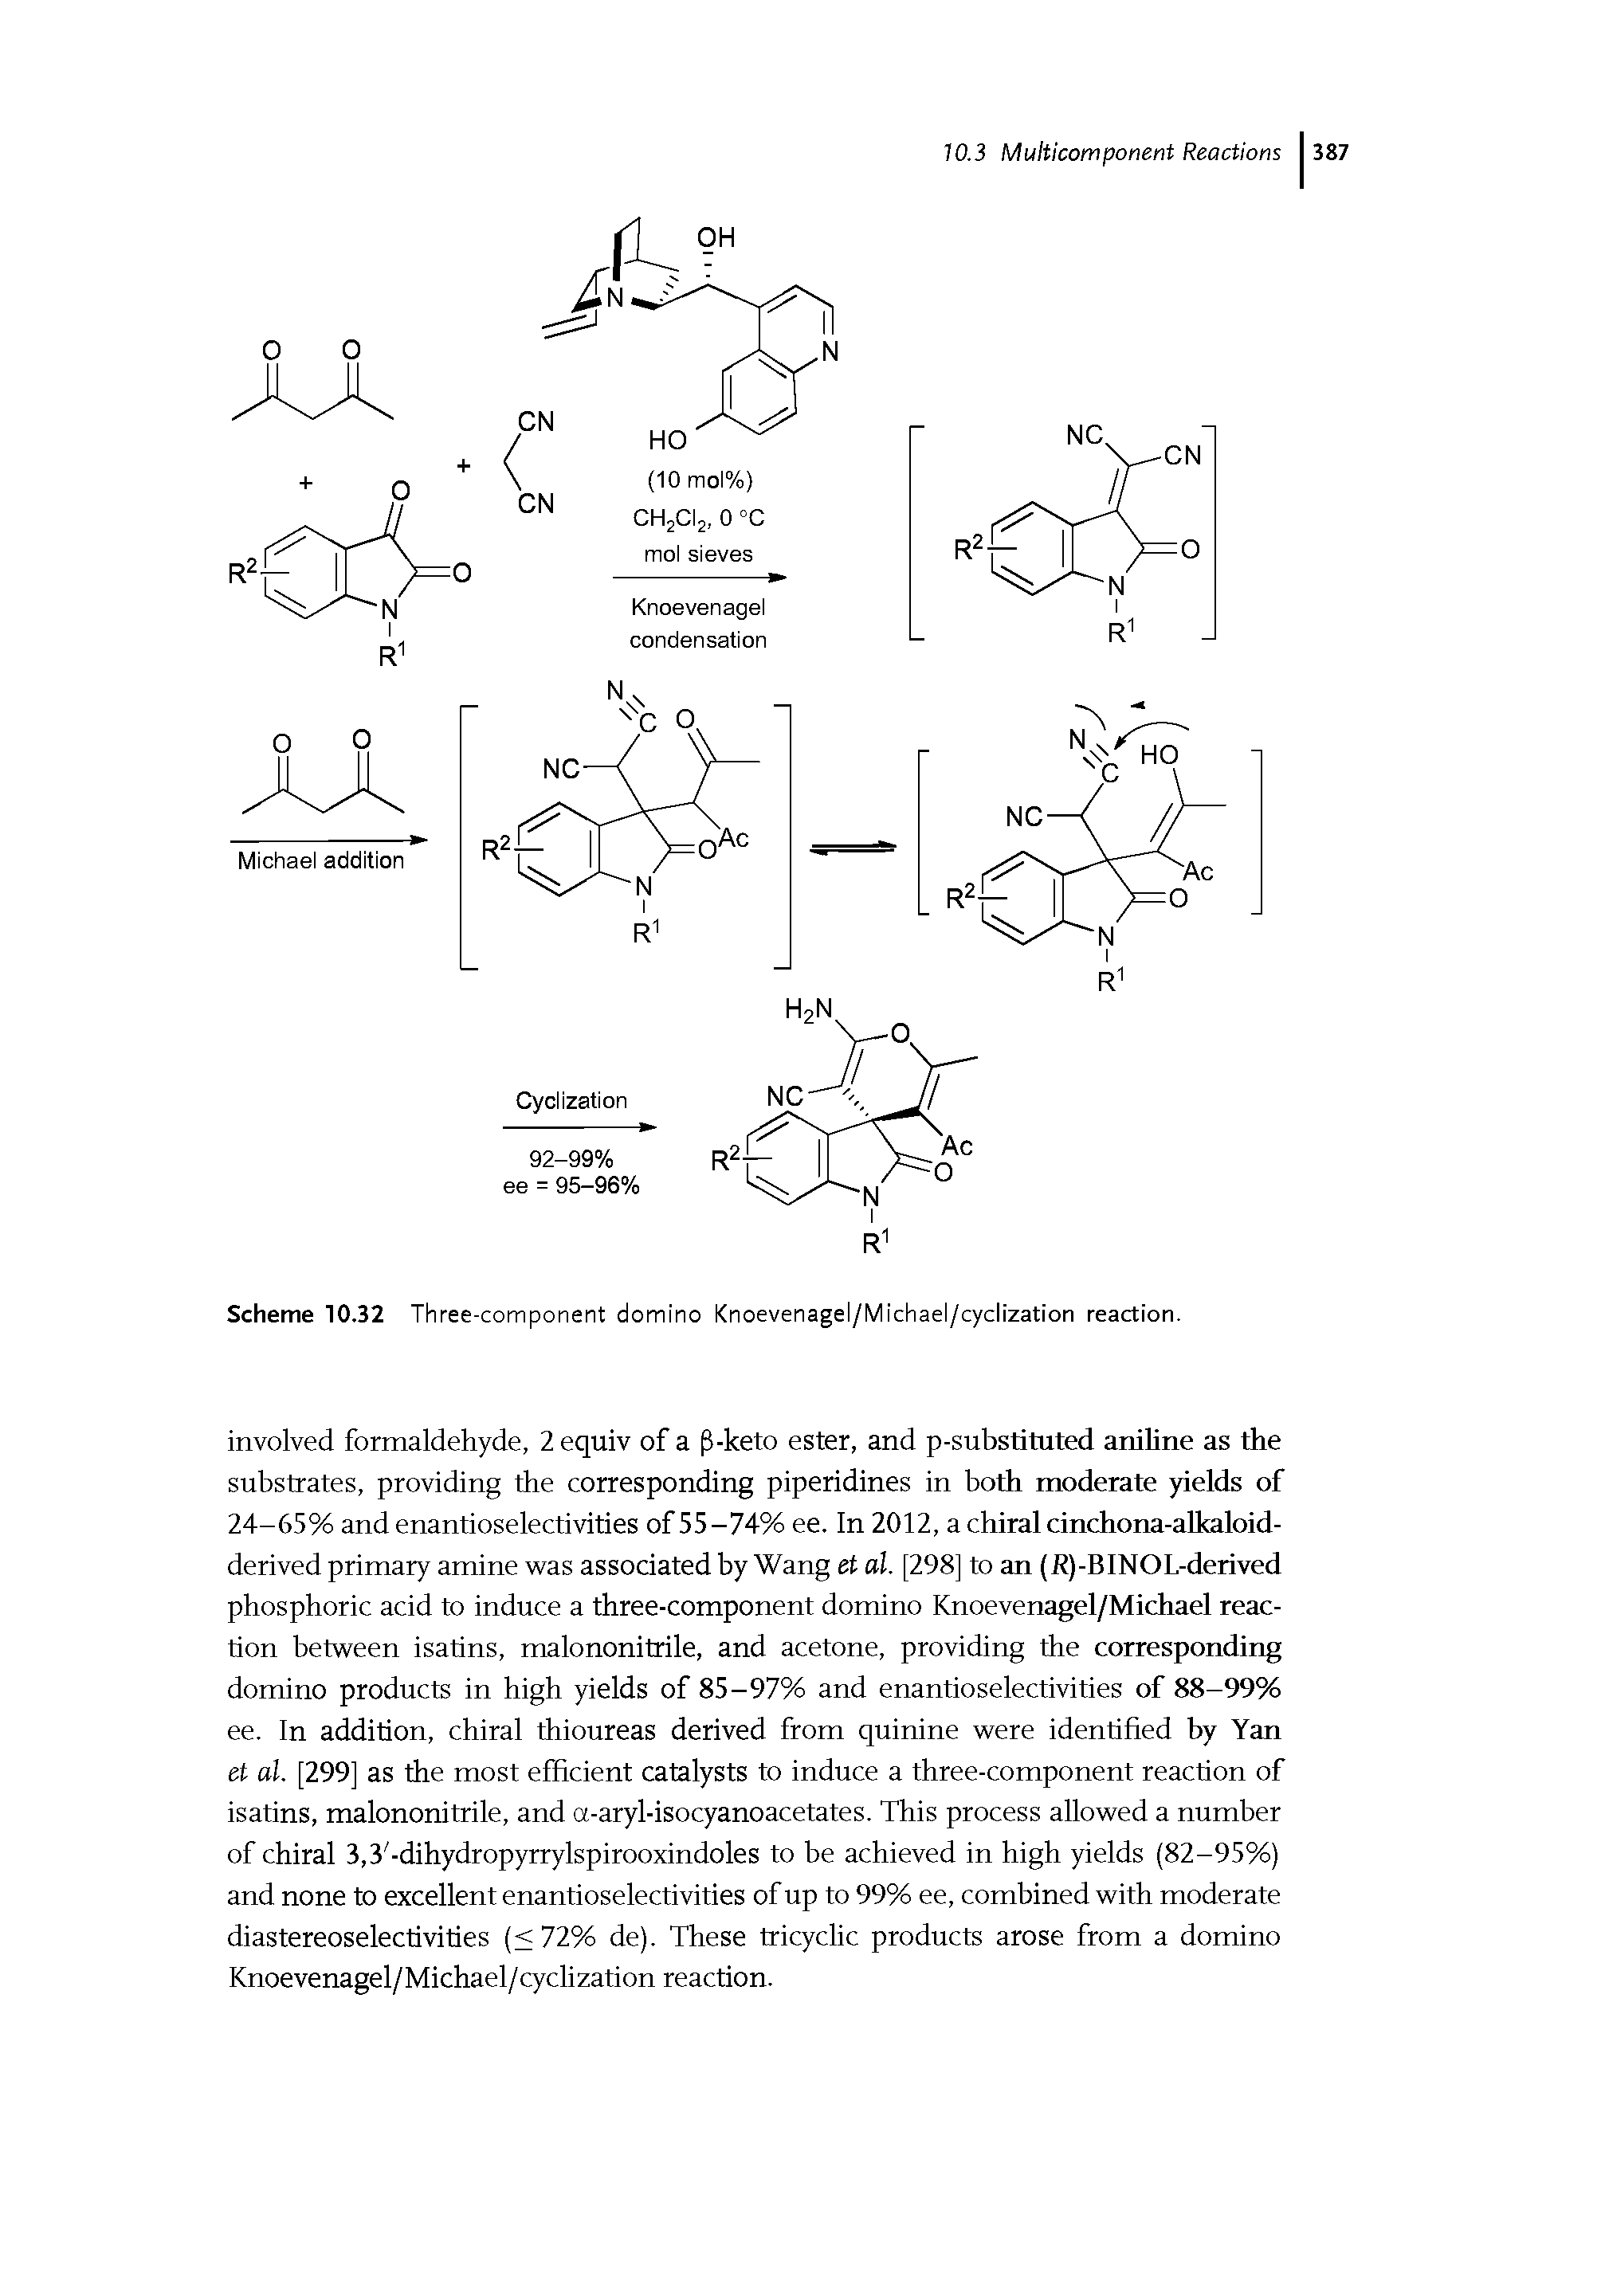 Scheme 10.32 Three-component domino Knoevenagel/Michael/cyclization reaction.